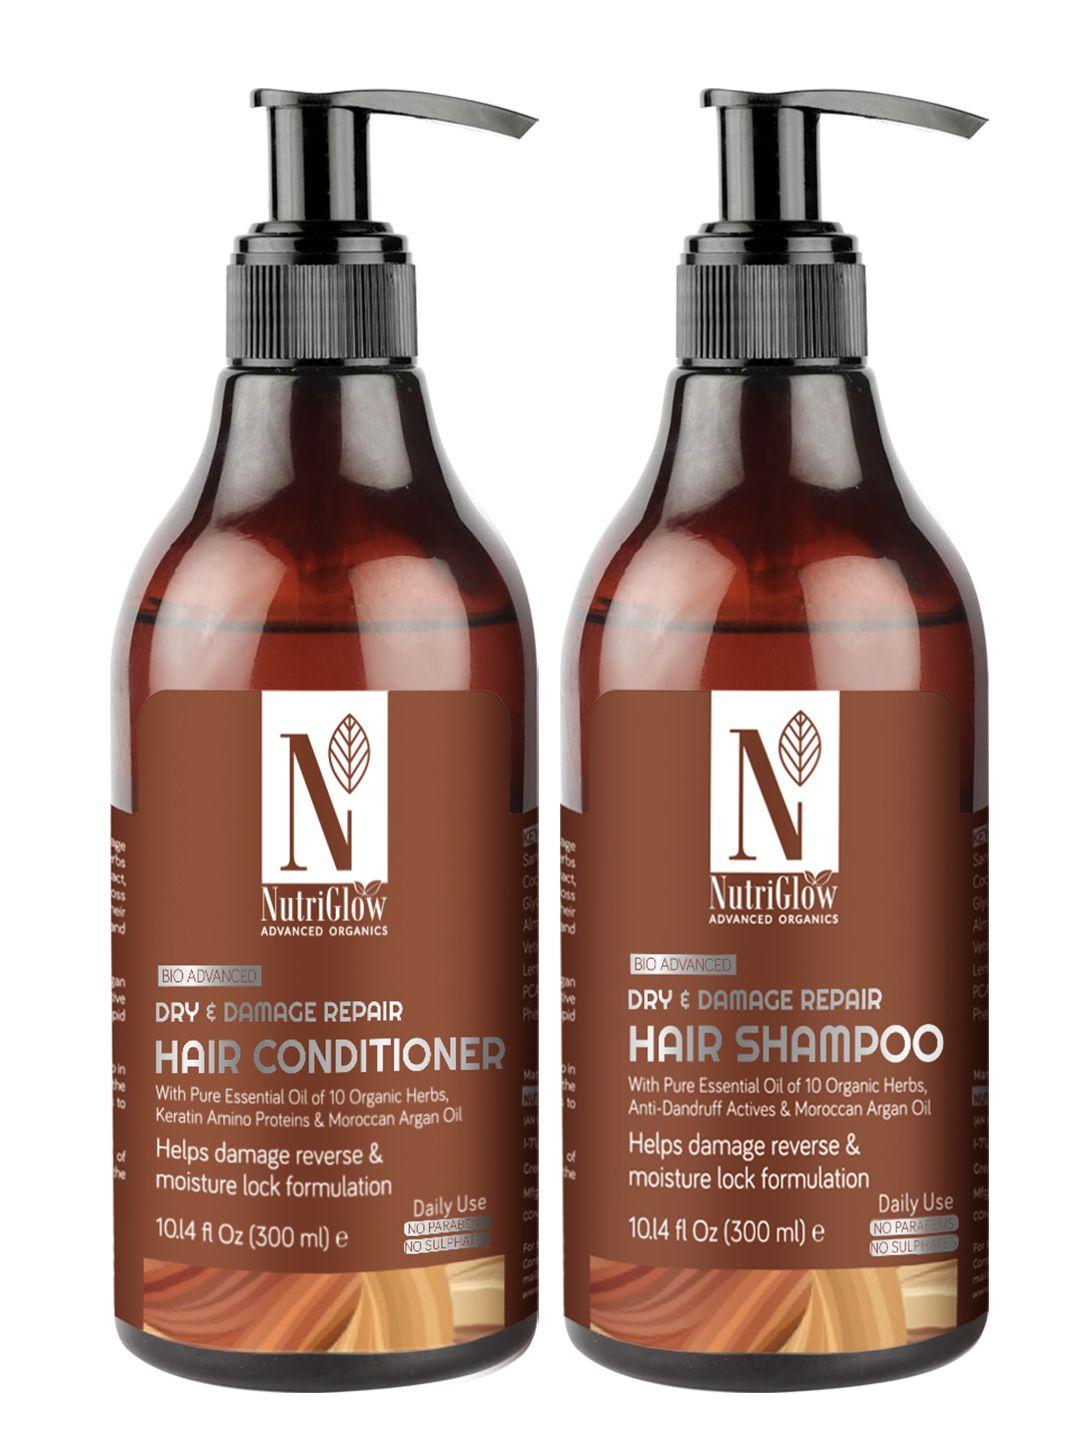 Nutriglow Advanced Organics Sustainable Dry & Damage Repair Hair Shampoo & Hair Conditioner 300ml Each